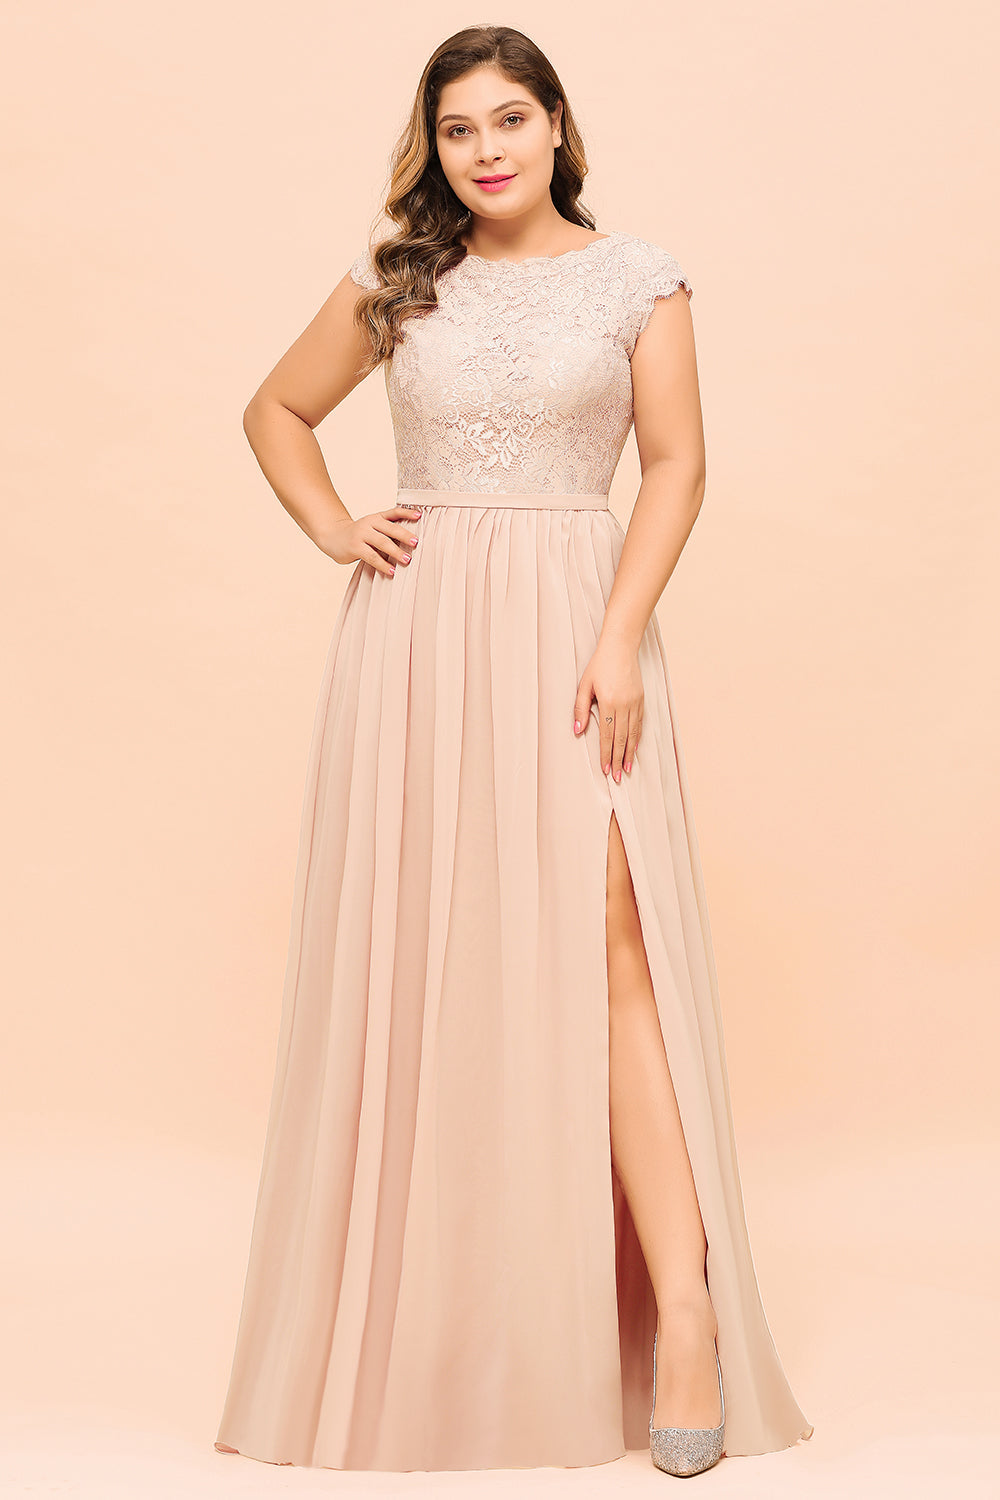 Elegant Jewel Chiffon Lace Affordable Bridesmaid Dresses with Slit-27dress